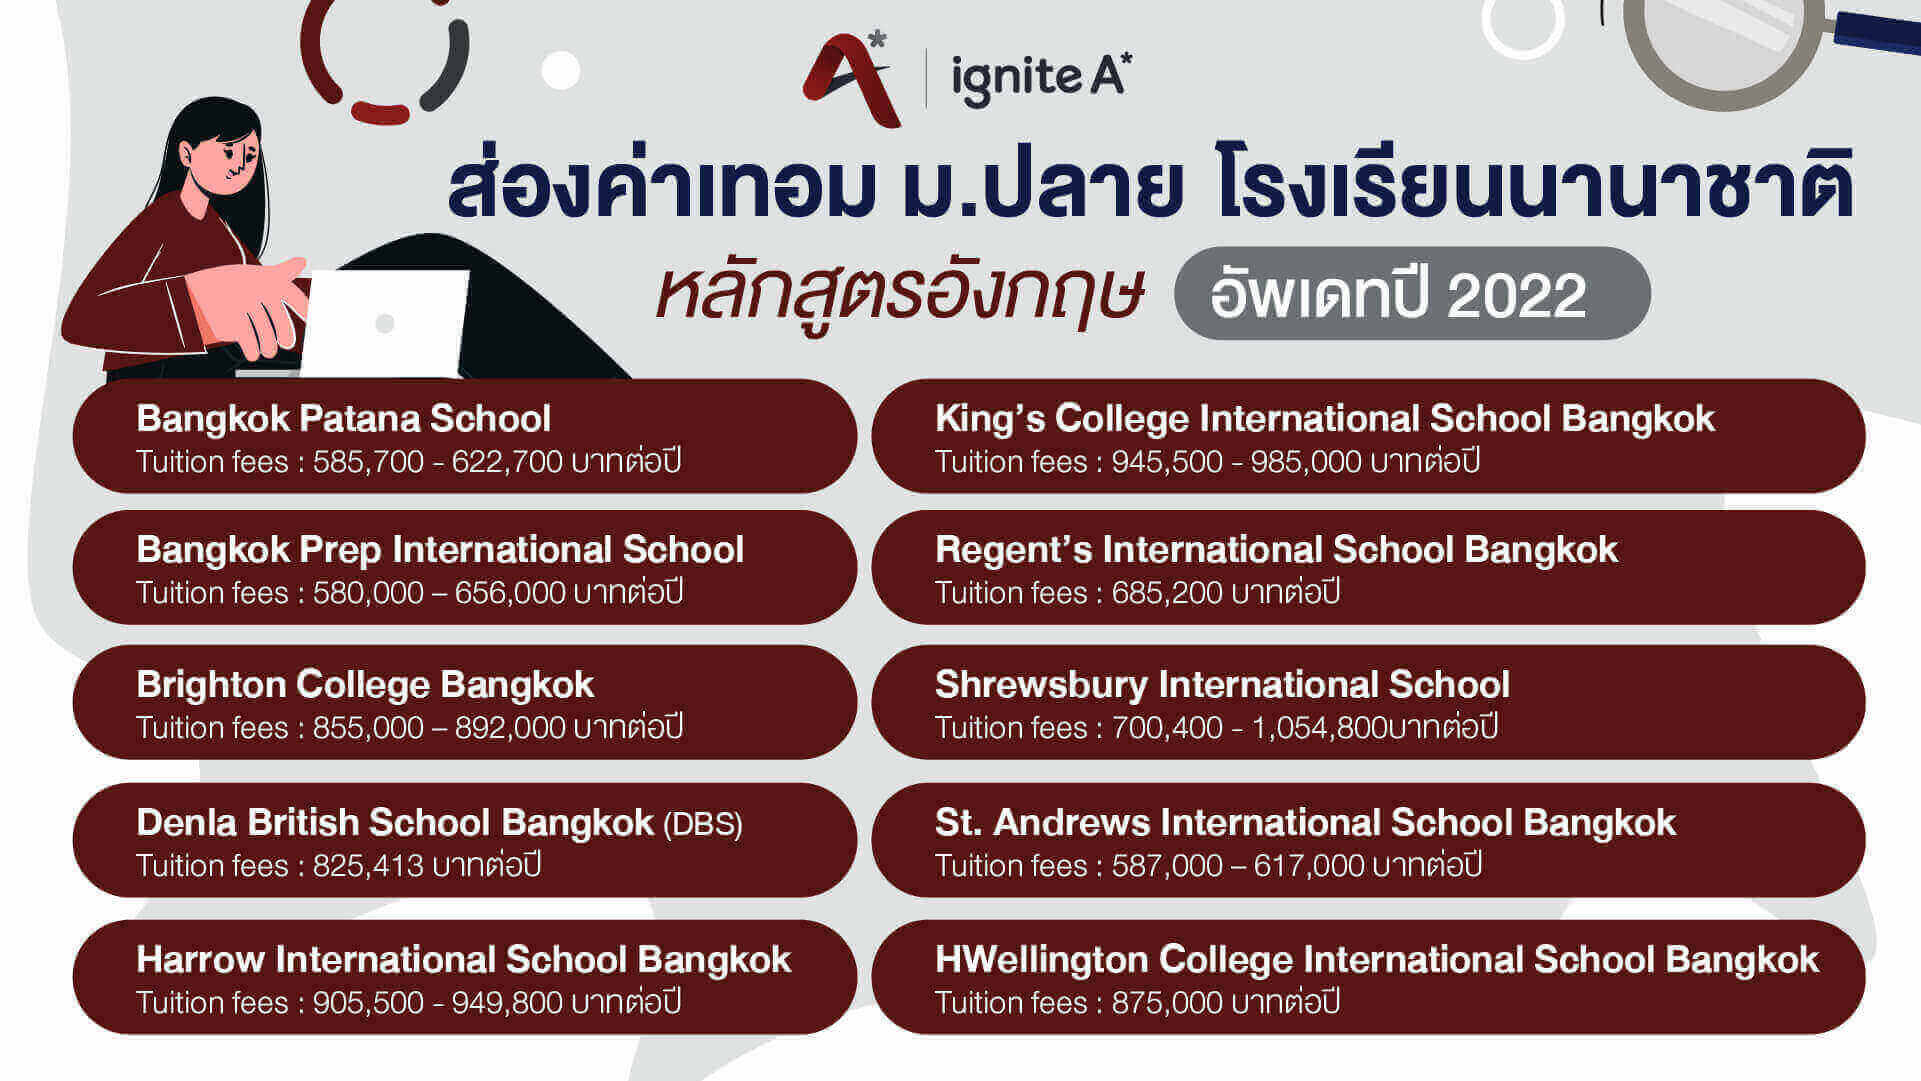 tuition fee for international schools in BKK